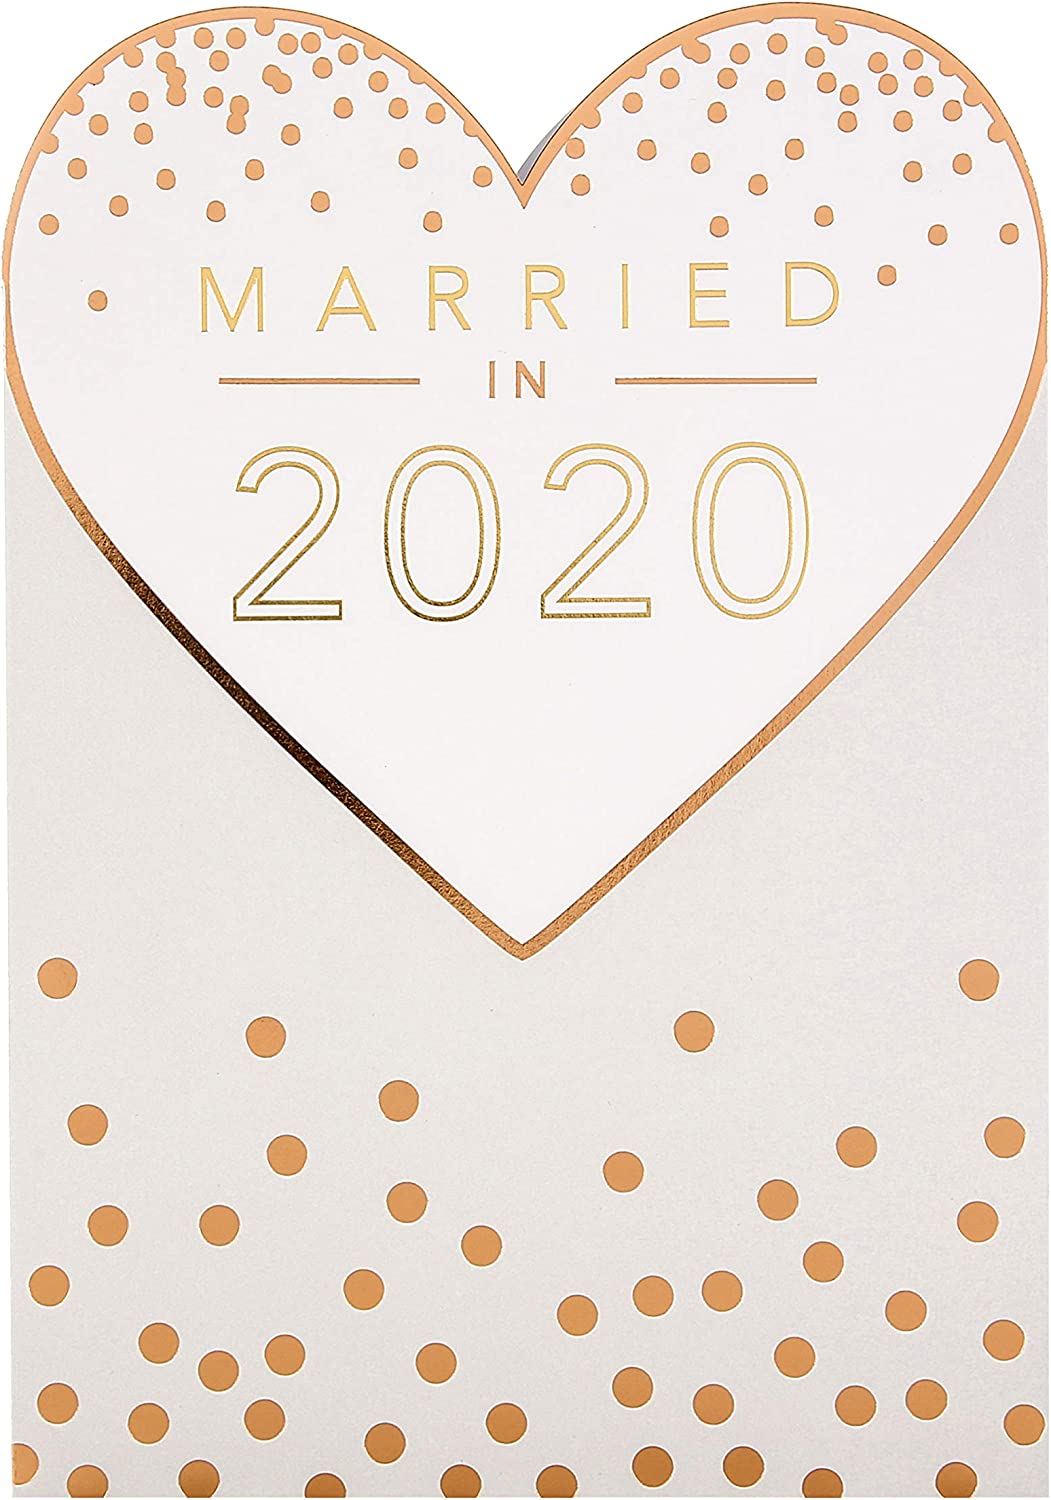 Hallmark ''Married in 2020'' Heart Style Card RRP £2.50 CLEARANCE XL £2